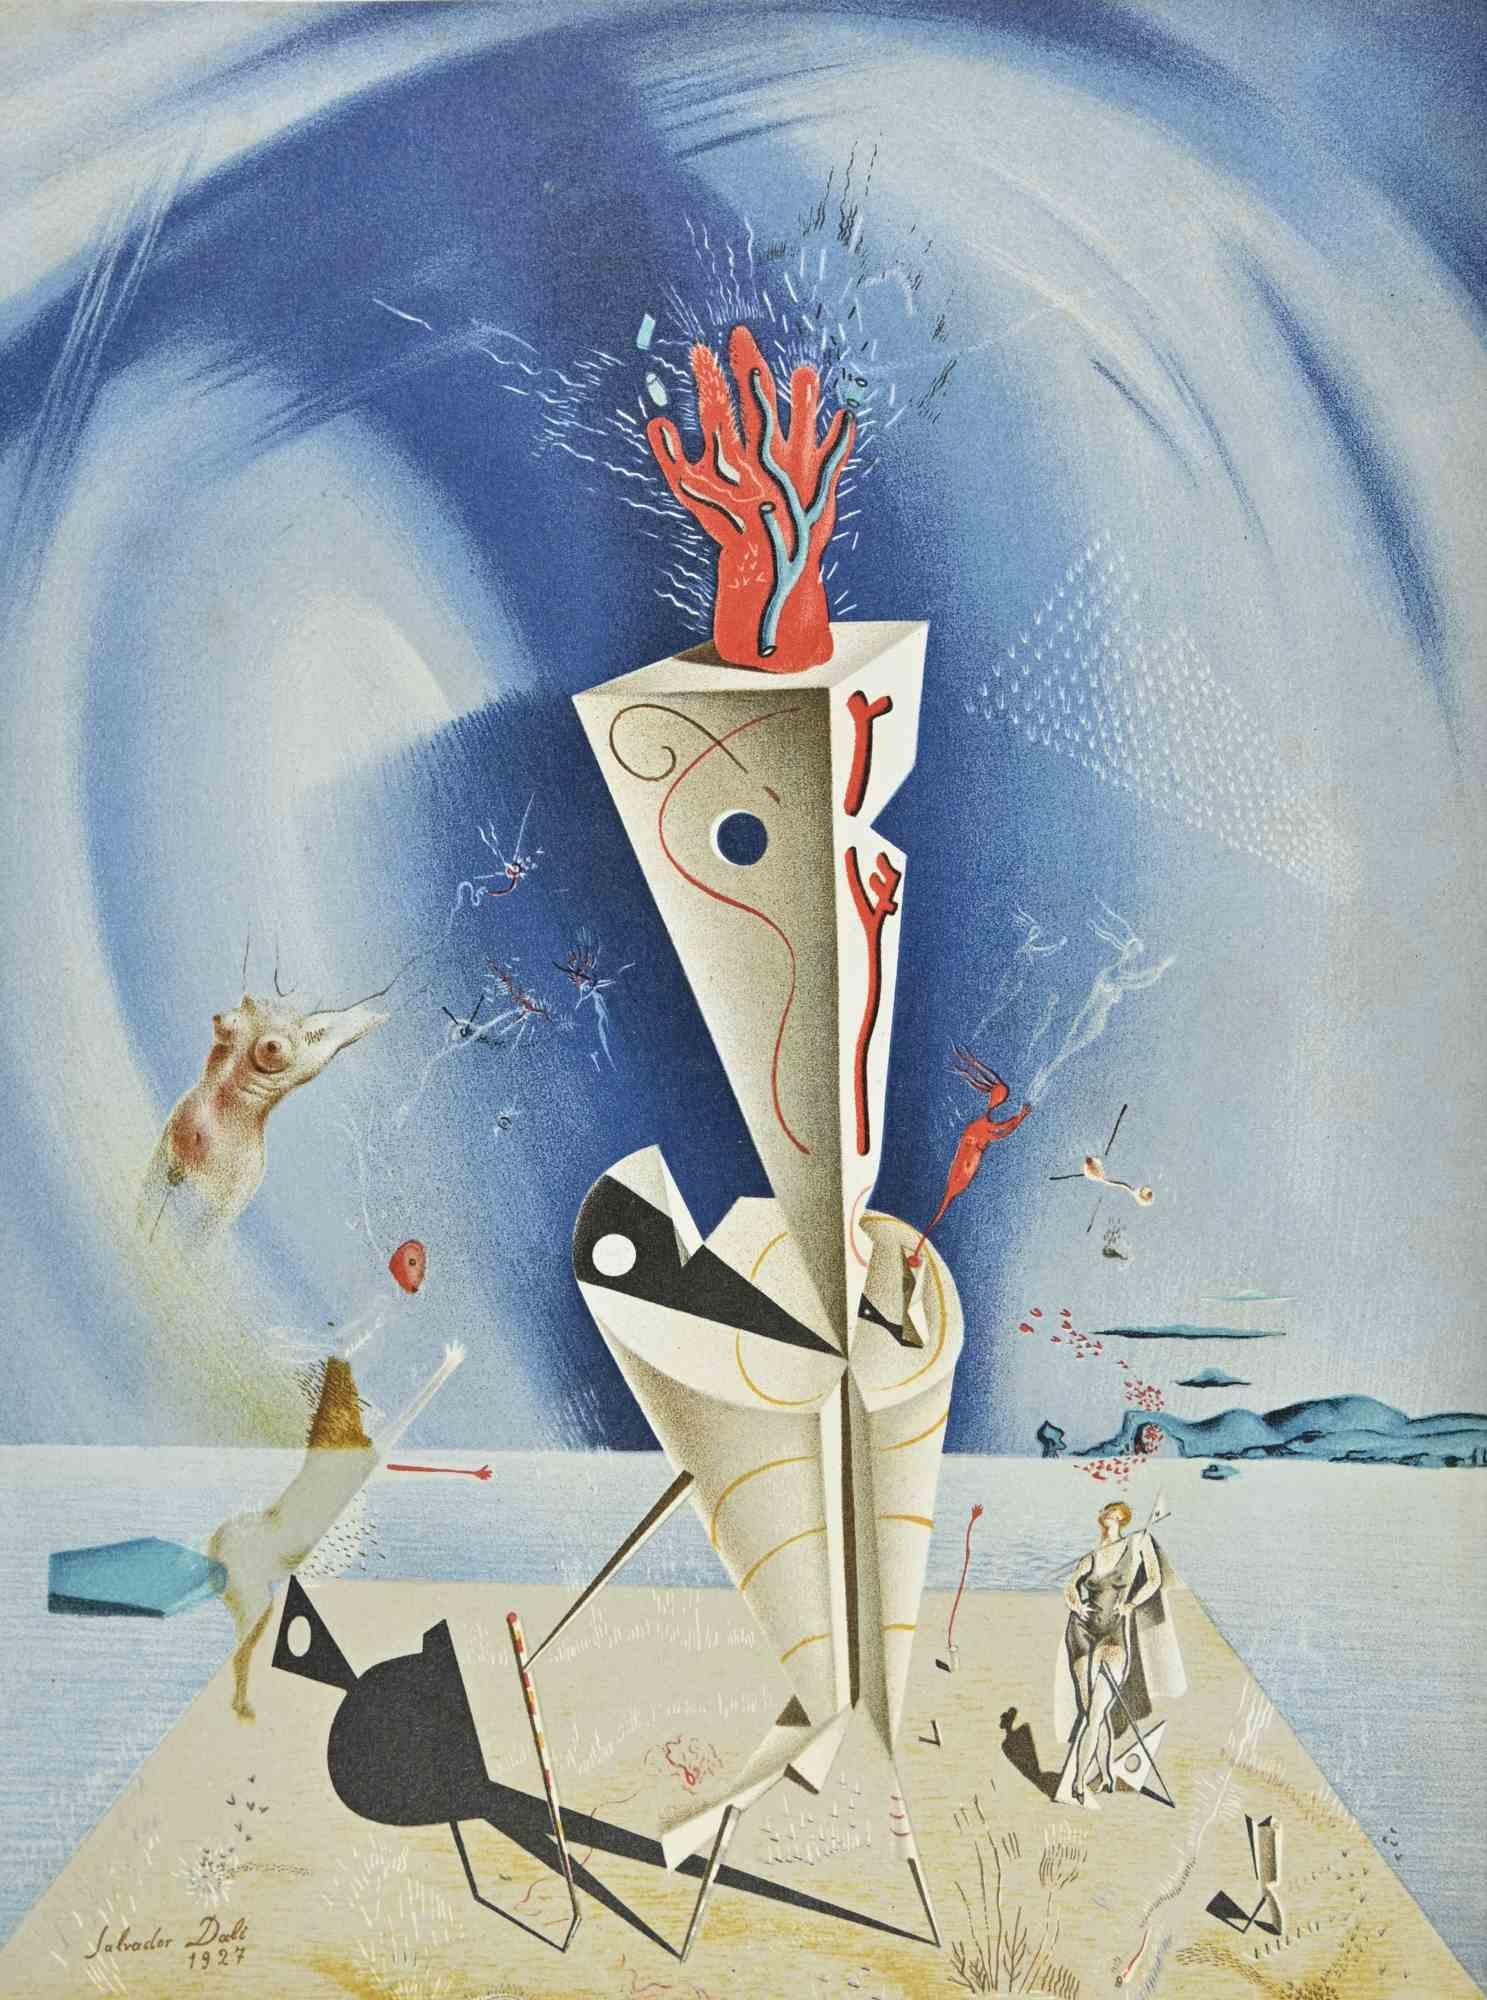 Salvador Dalí Figurative Print - Appareil et Main - Lithograph after Salvador Dalì - 1974